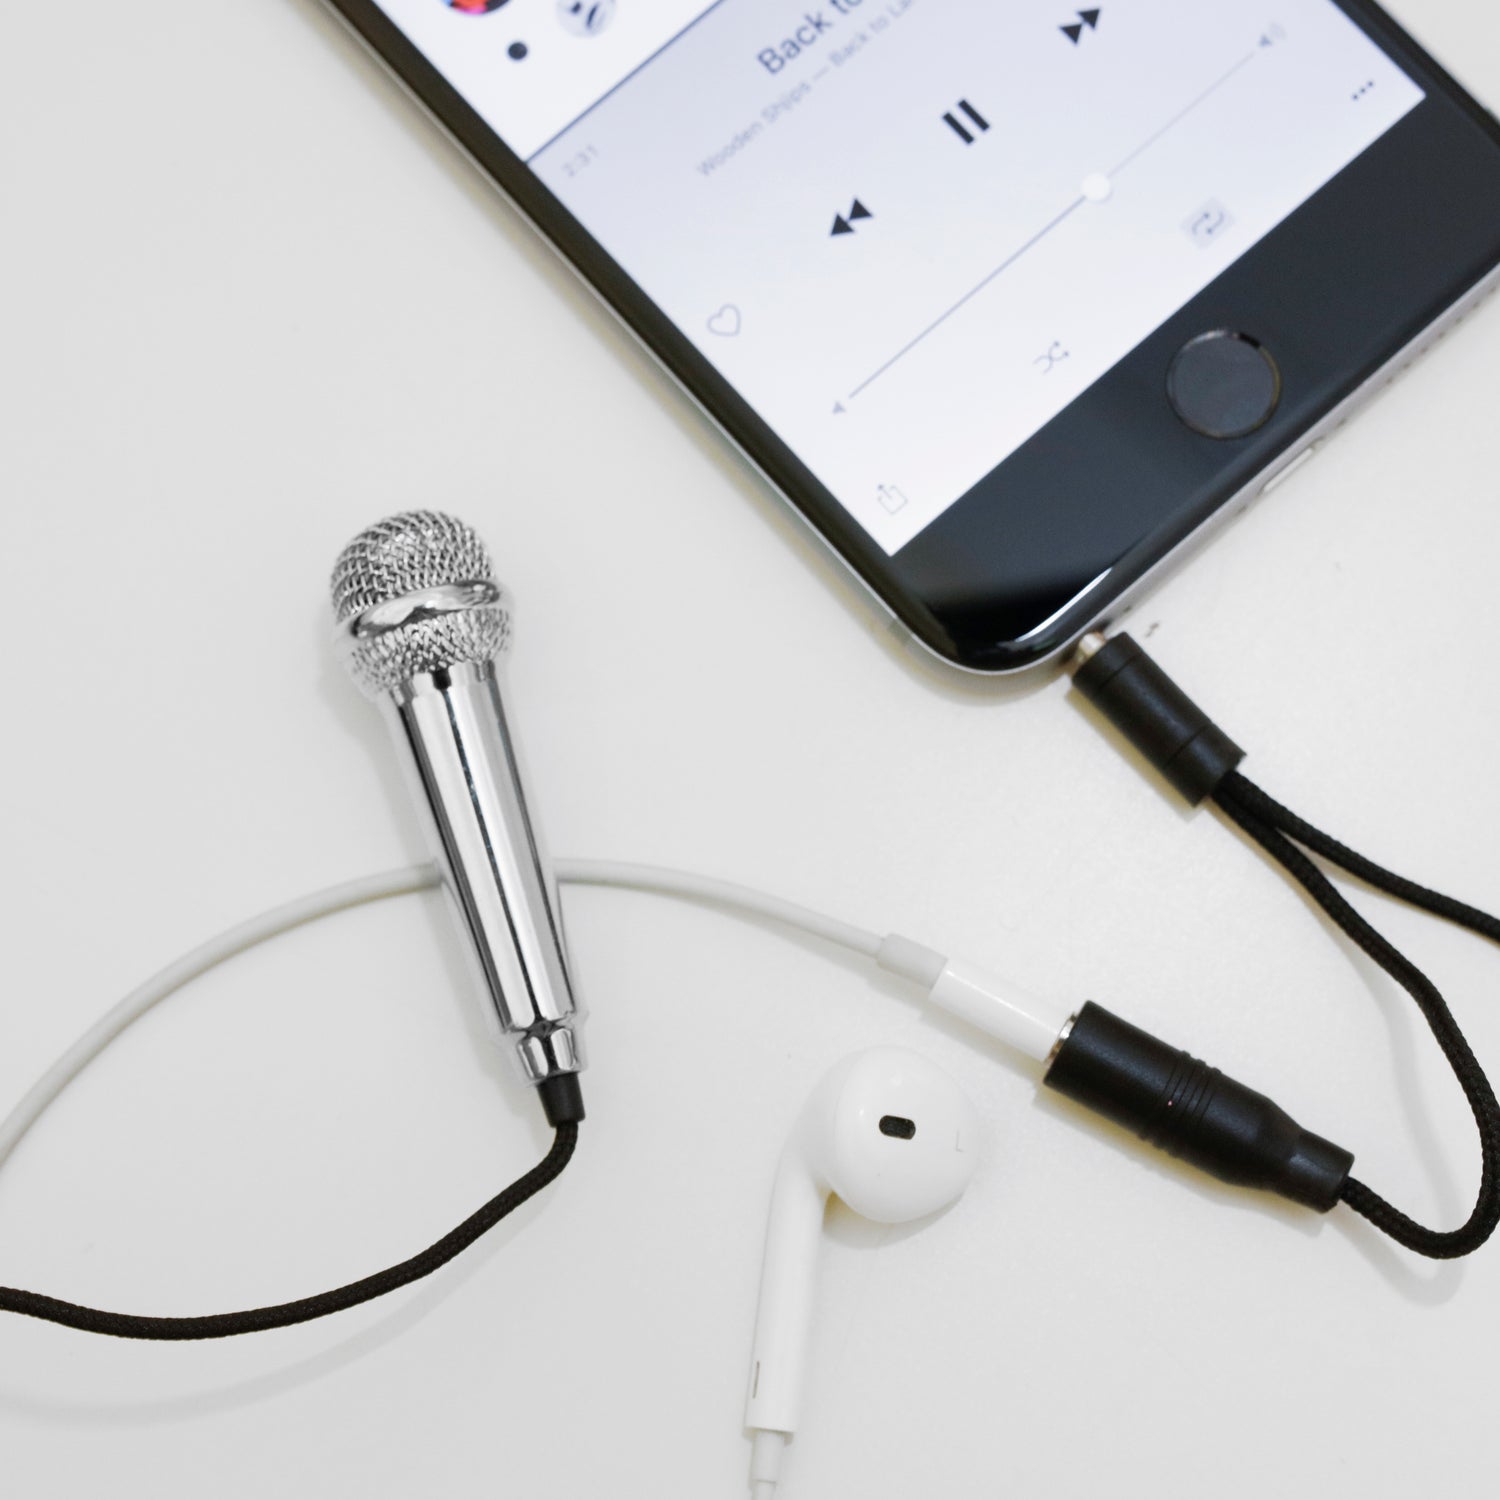 NEW* Kikkerland Mini Karaoke Microphone Perfect for Smartphones